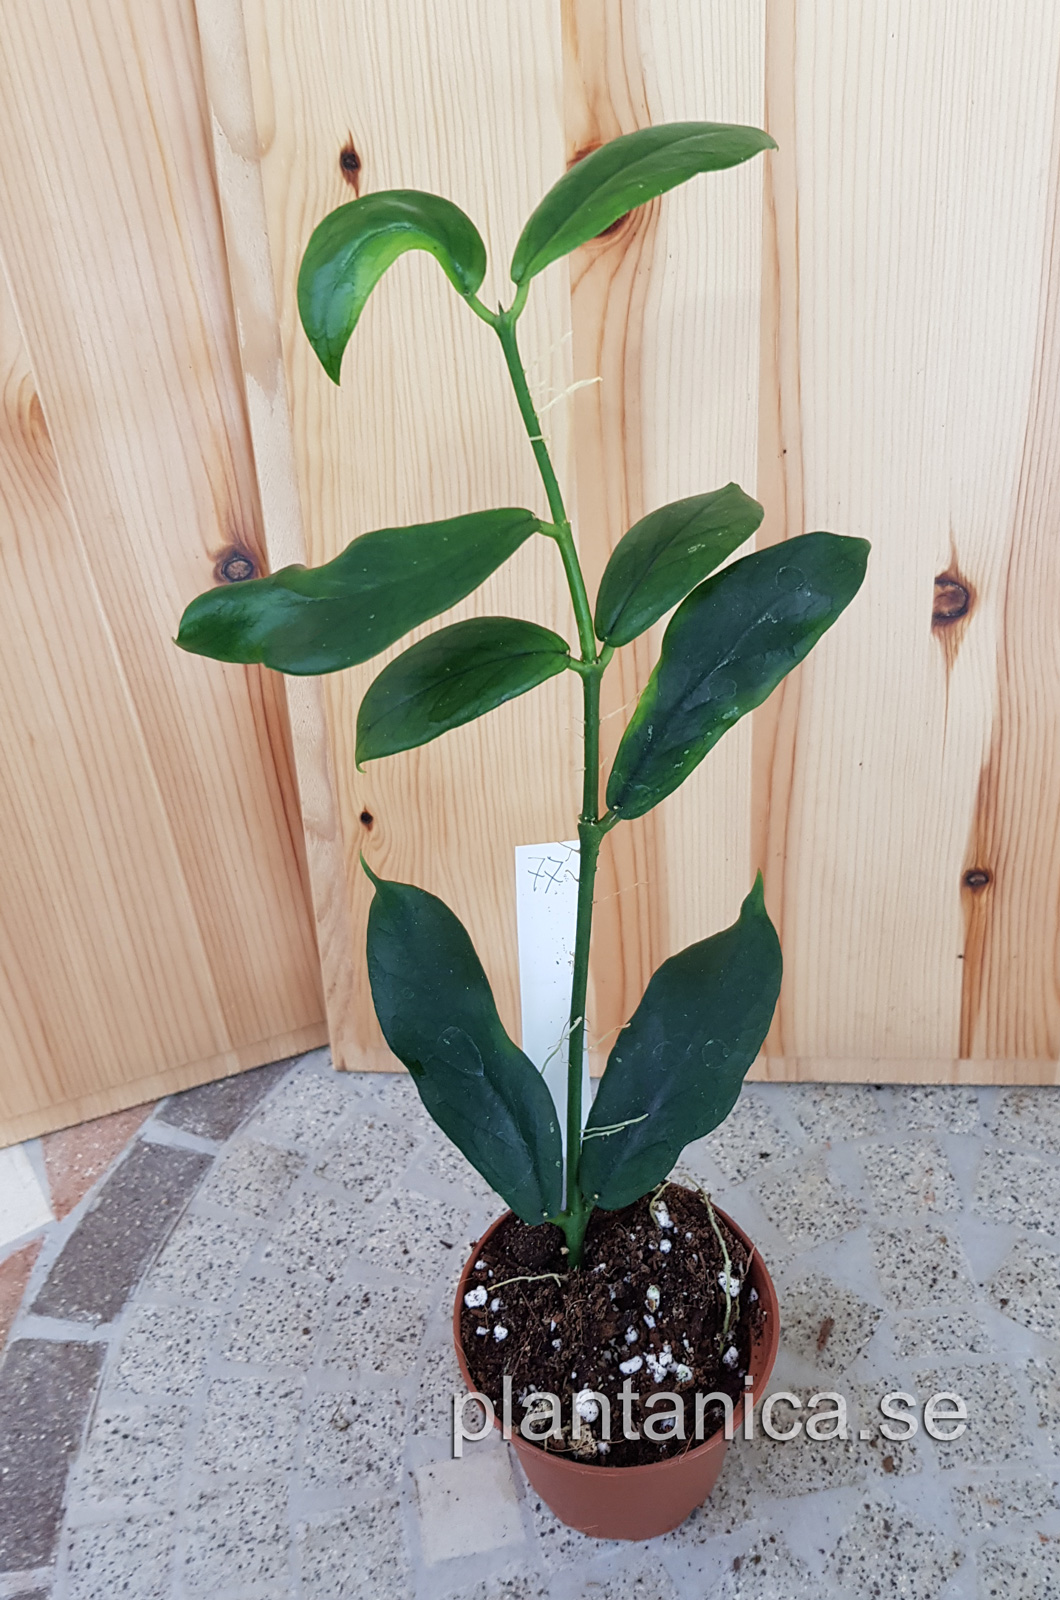 Hoya lobbii - planta 77 kp hos Plantanica webbutik